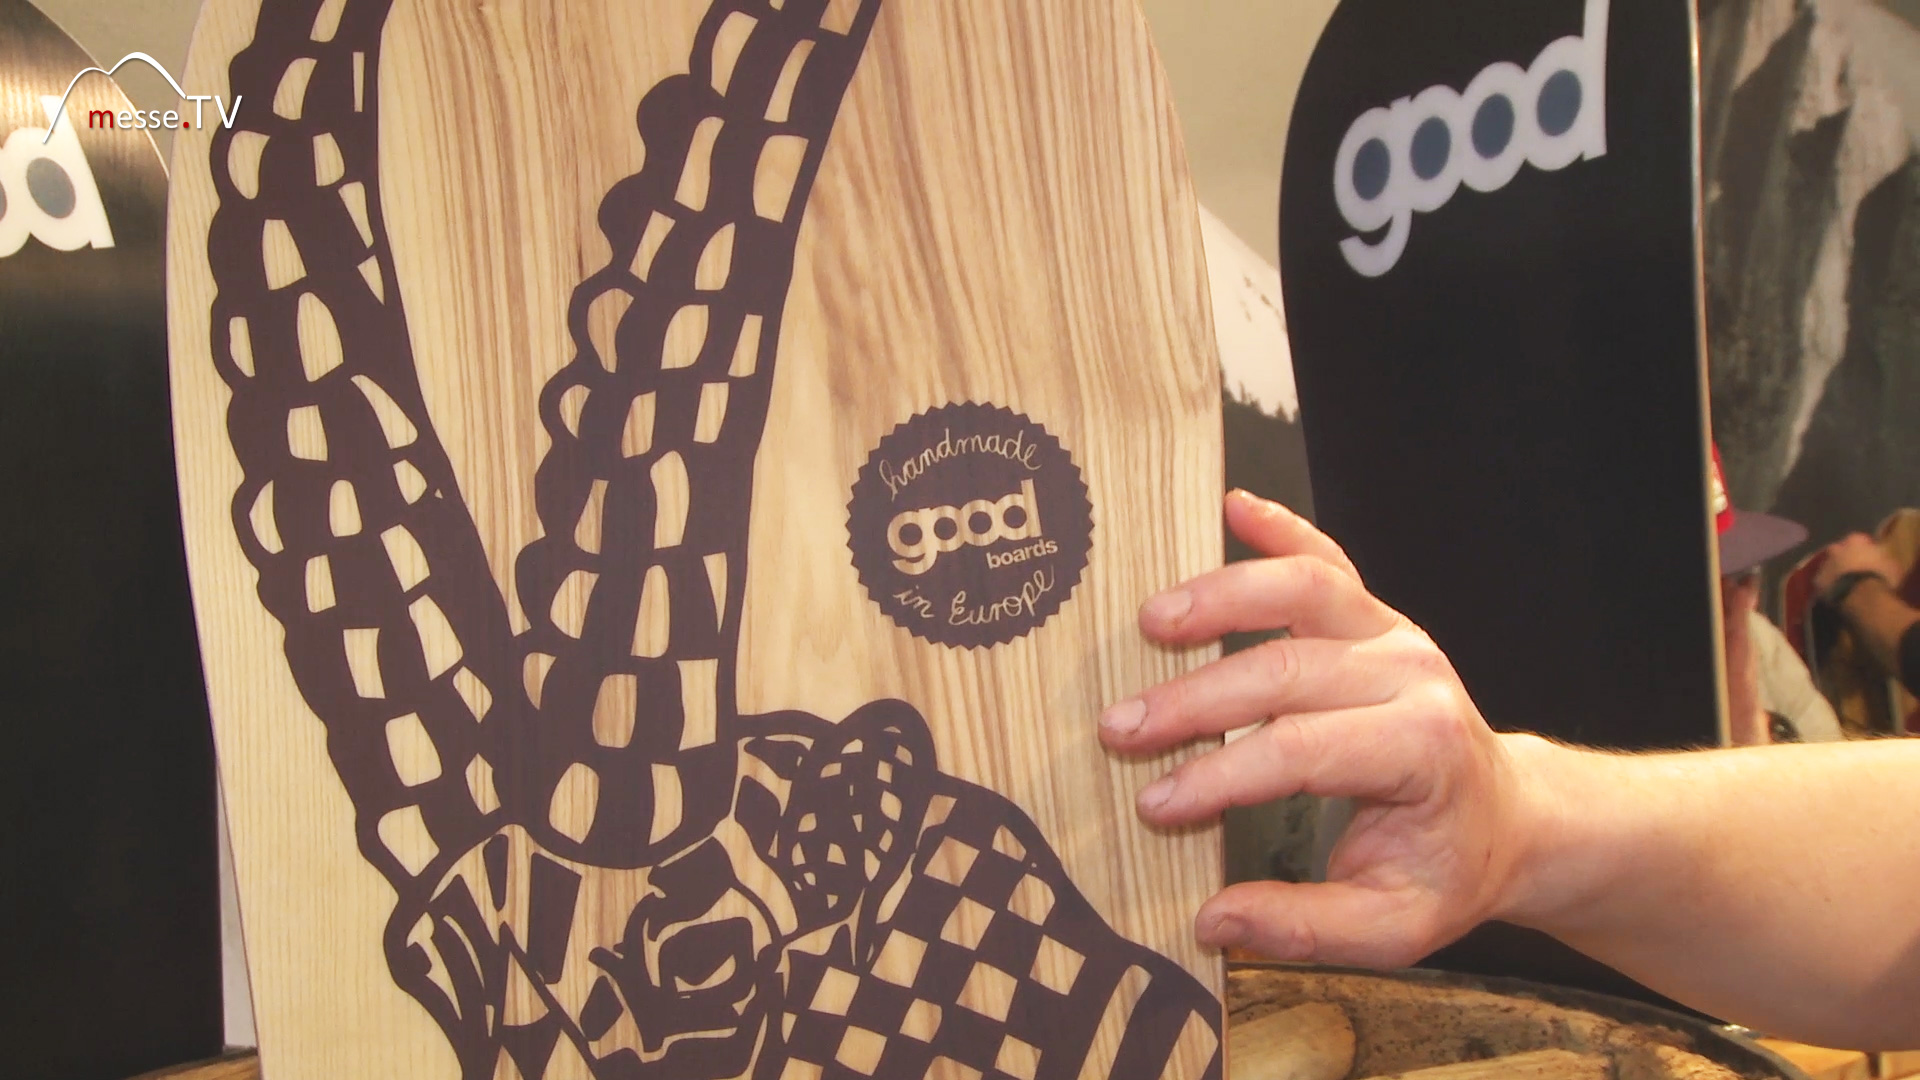 Good Boards Holz Snowboard mit Steinbock Motiv Ispo 2017